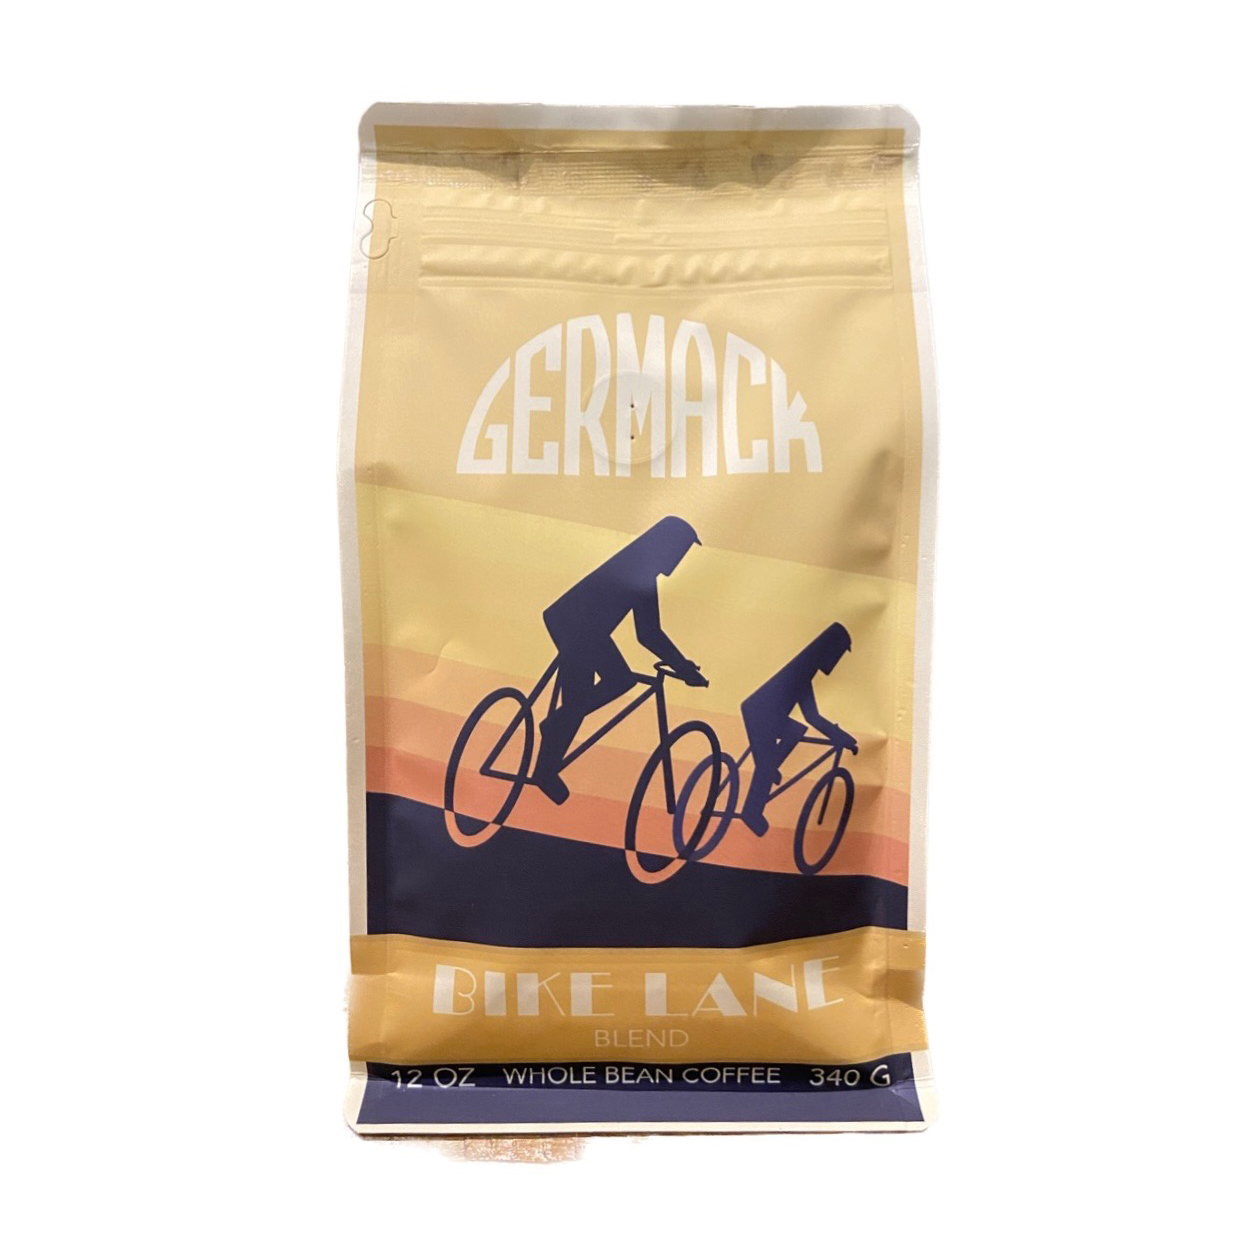 Picture Germack Coffee Blend (12 oz.) - Bike Lane